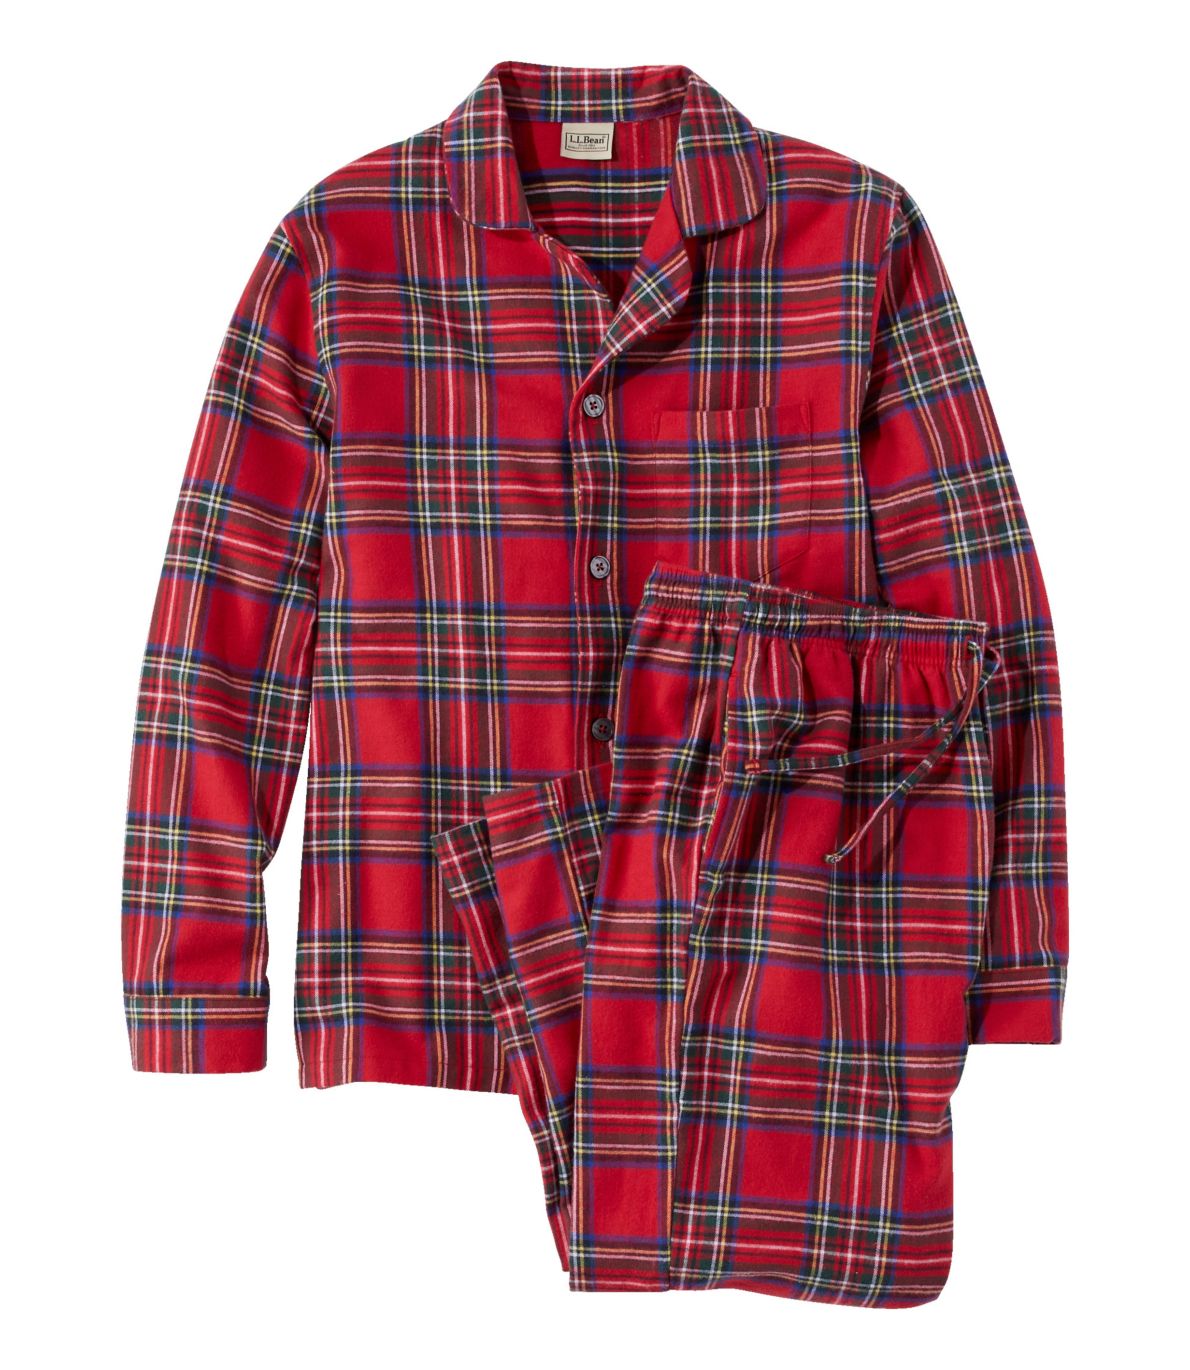 Men's Scotch Plaid Flannel Pajamas